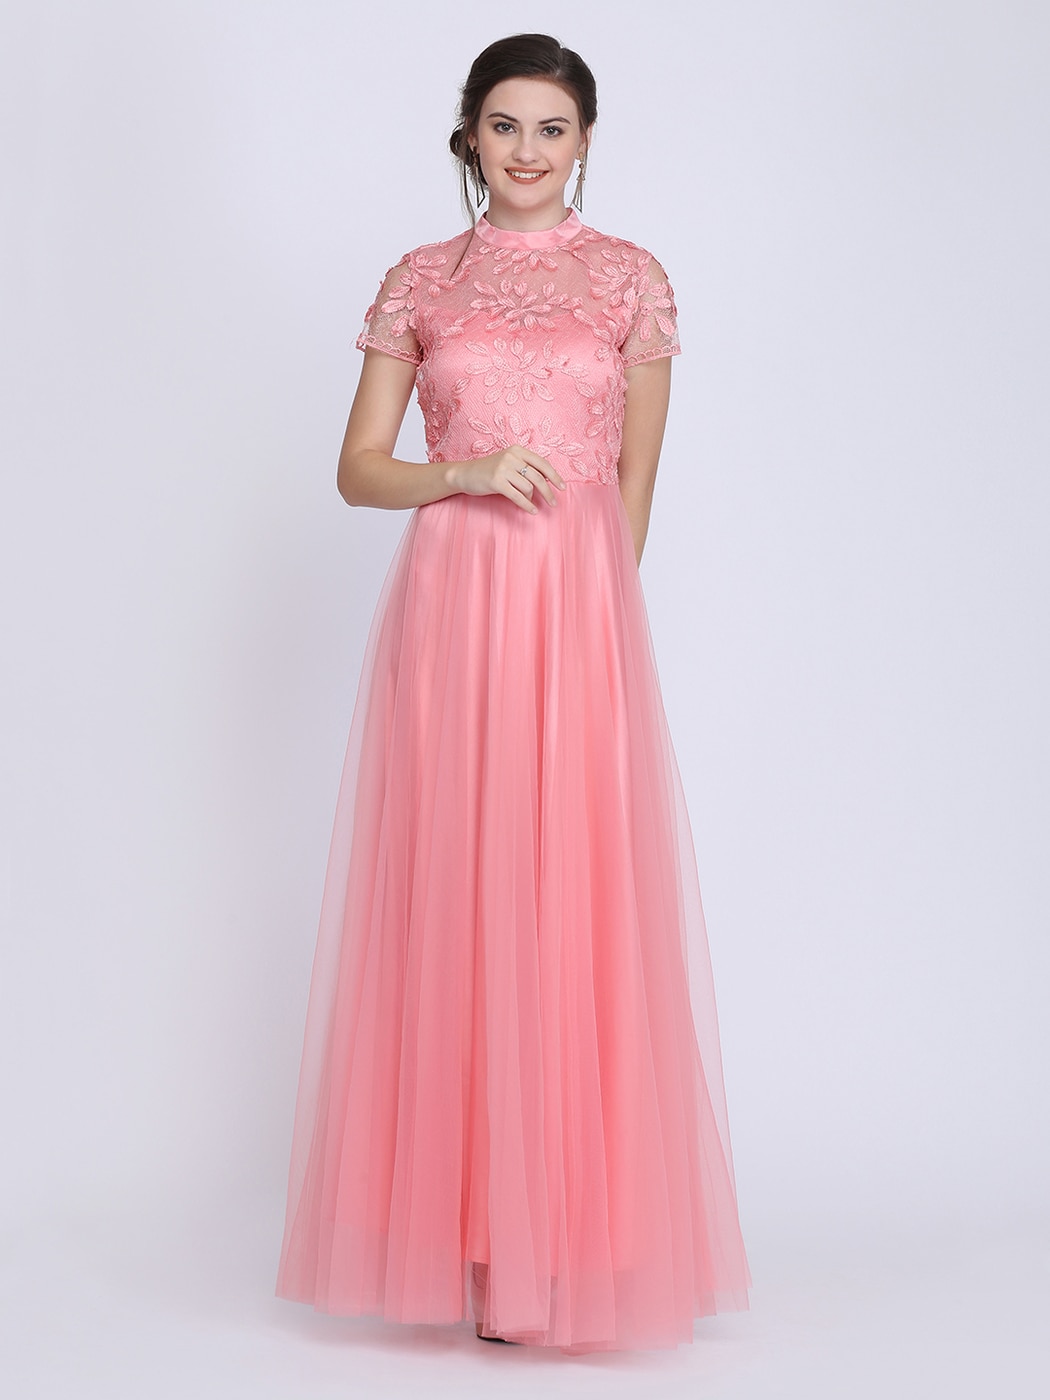 gaun dress pink